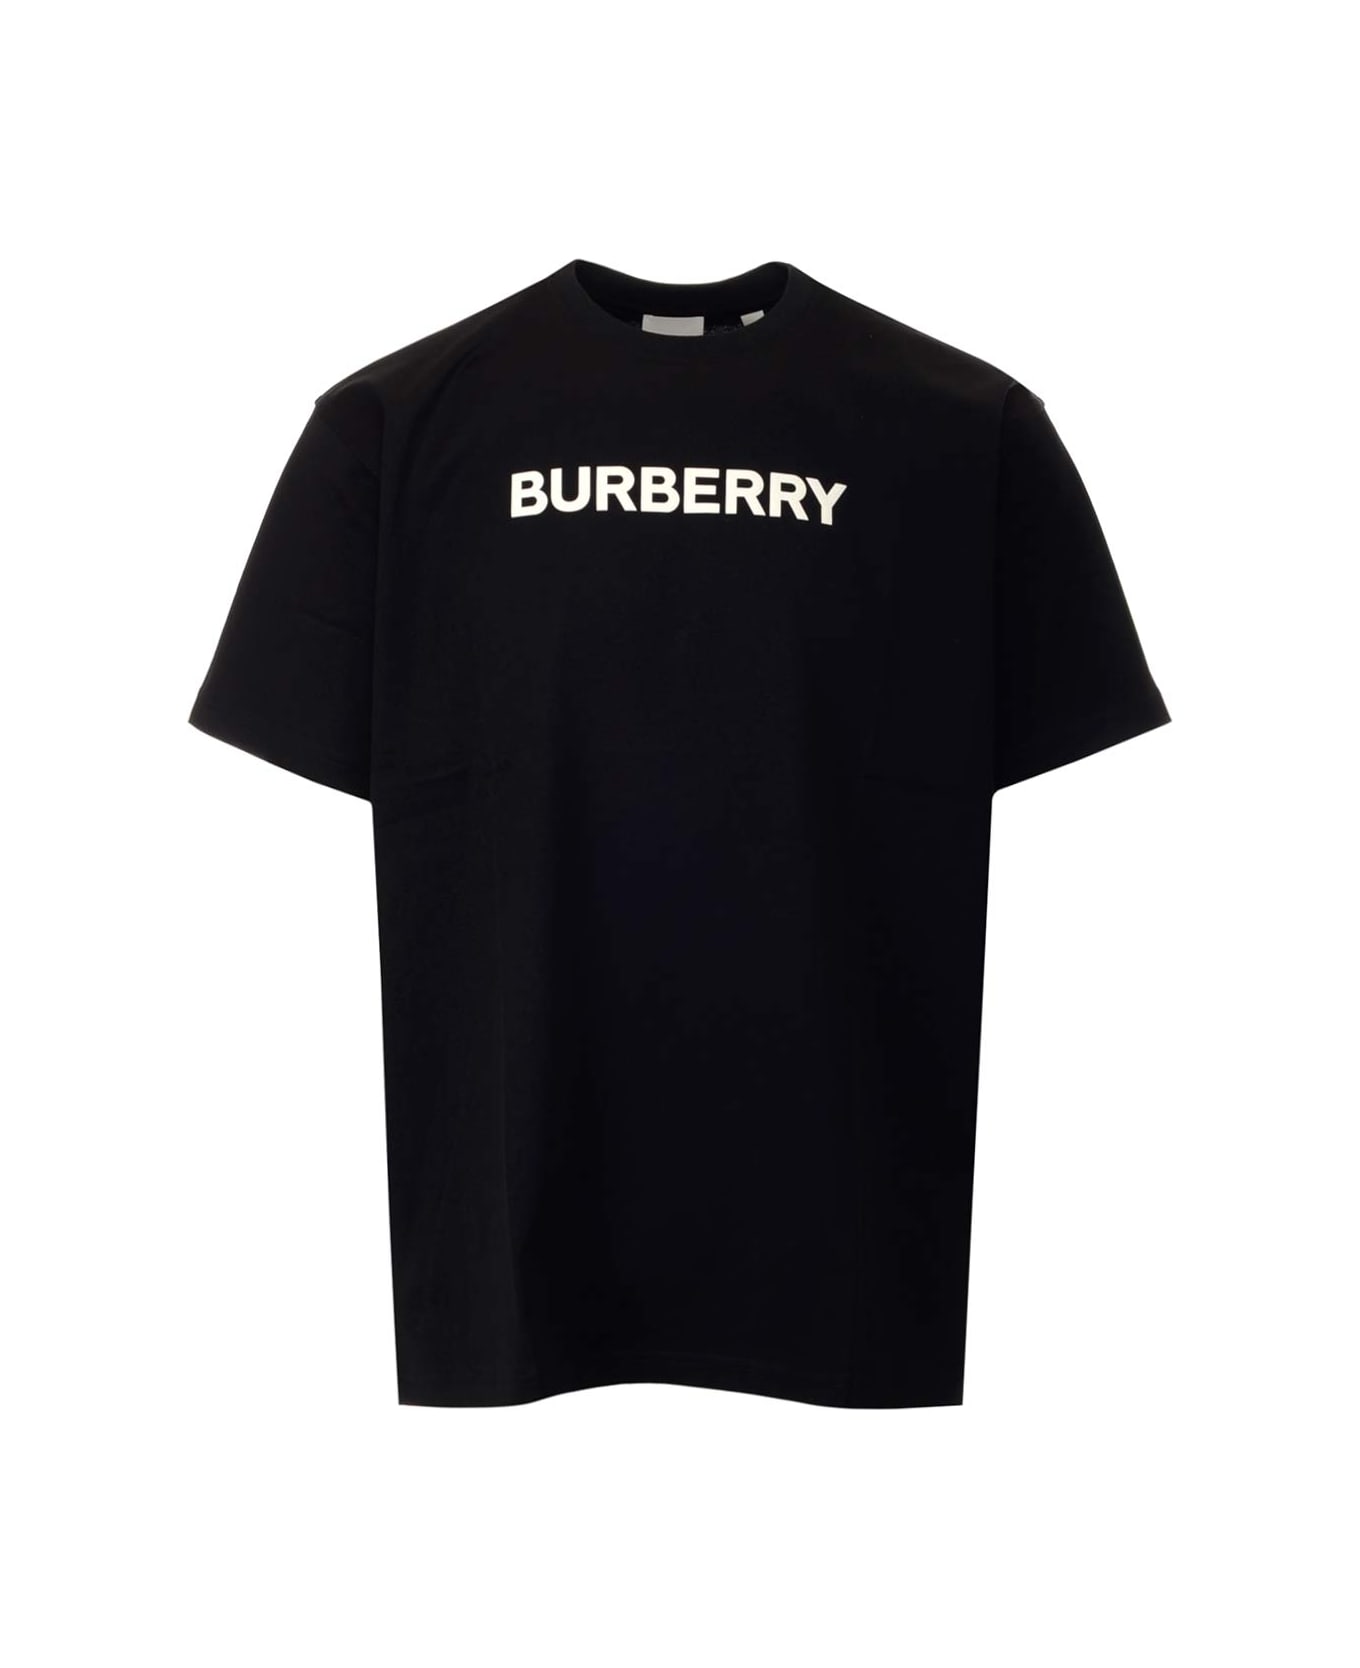 Burberry Black T-shirt With Logo - Black シャツ